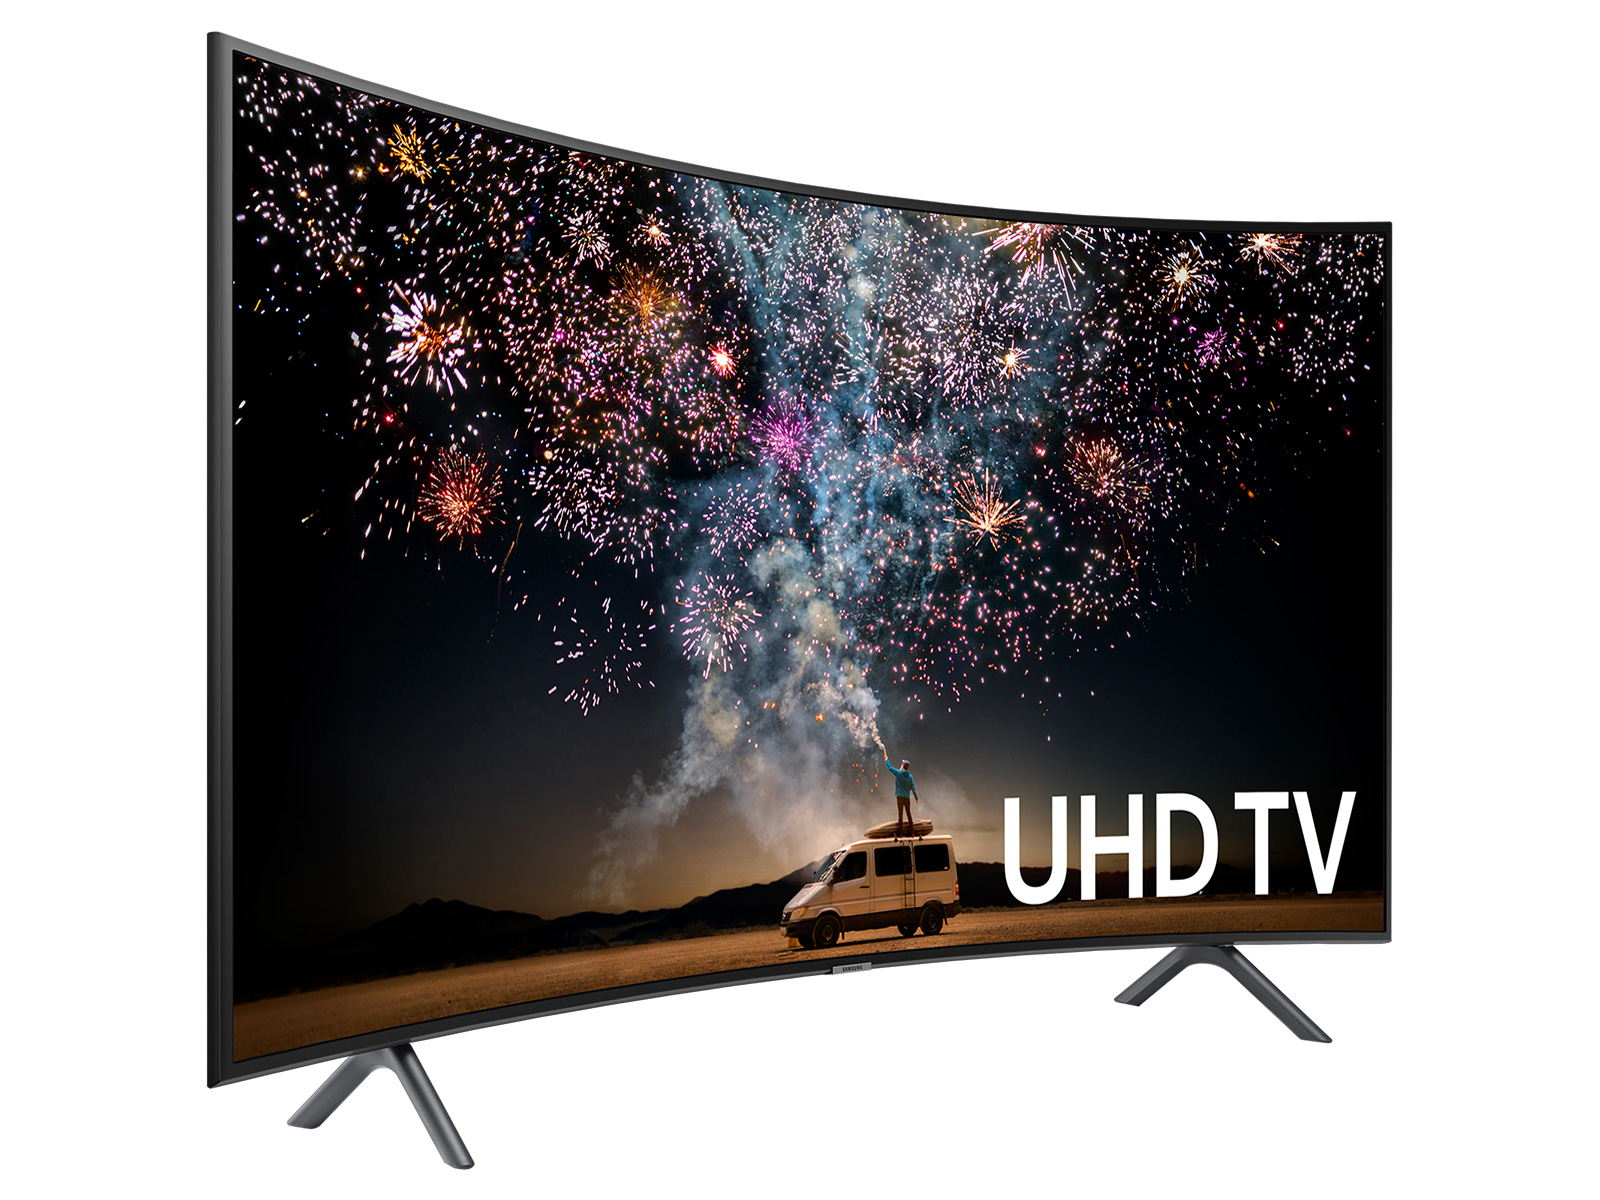 UHD 4K Curved Smart TV RU7300 55 - Specs & Price